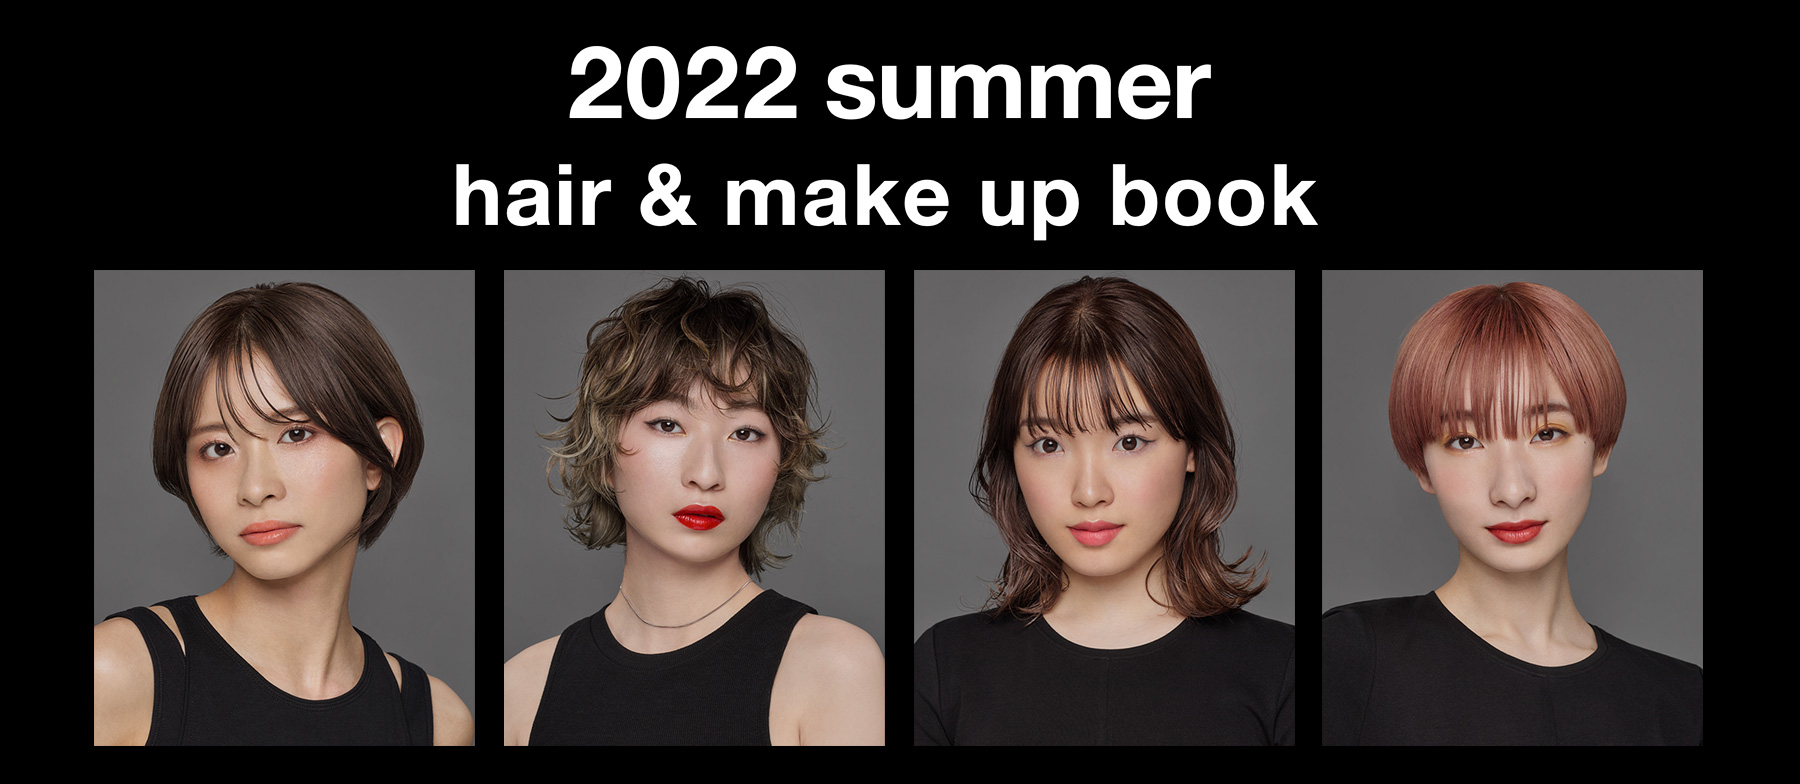 2022 summer hair & make up book